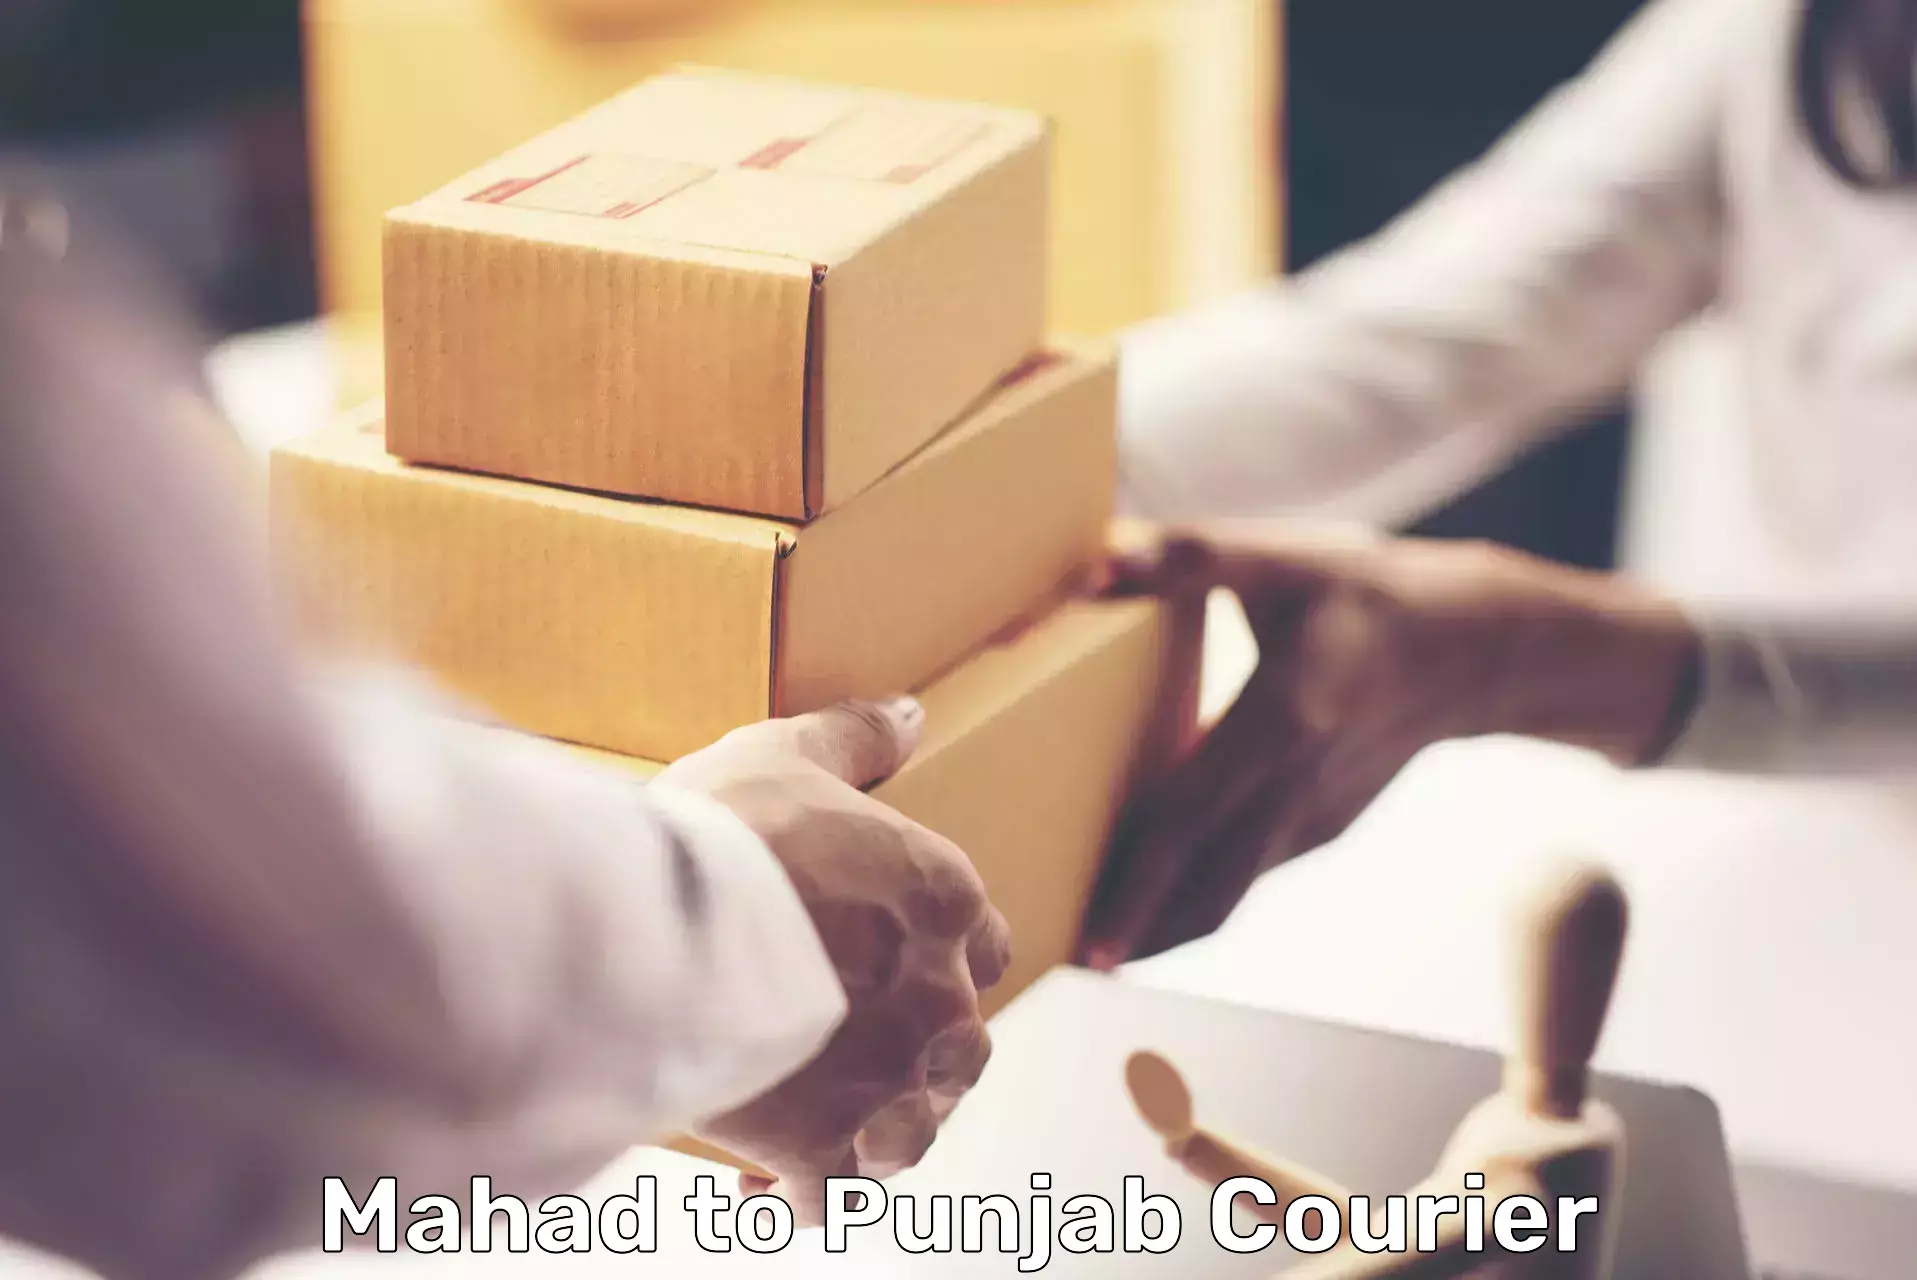 Courier service partnerships Mahad to Punjab